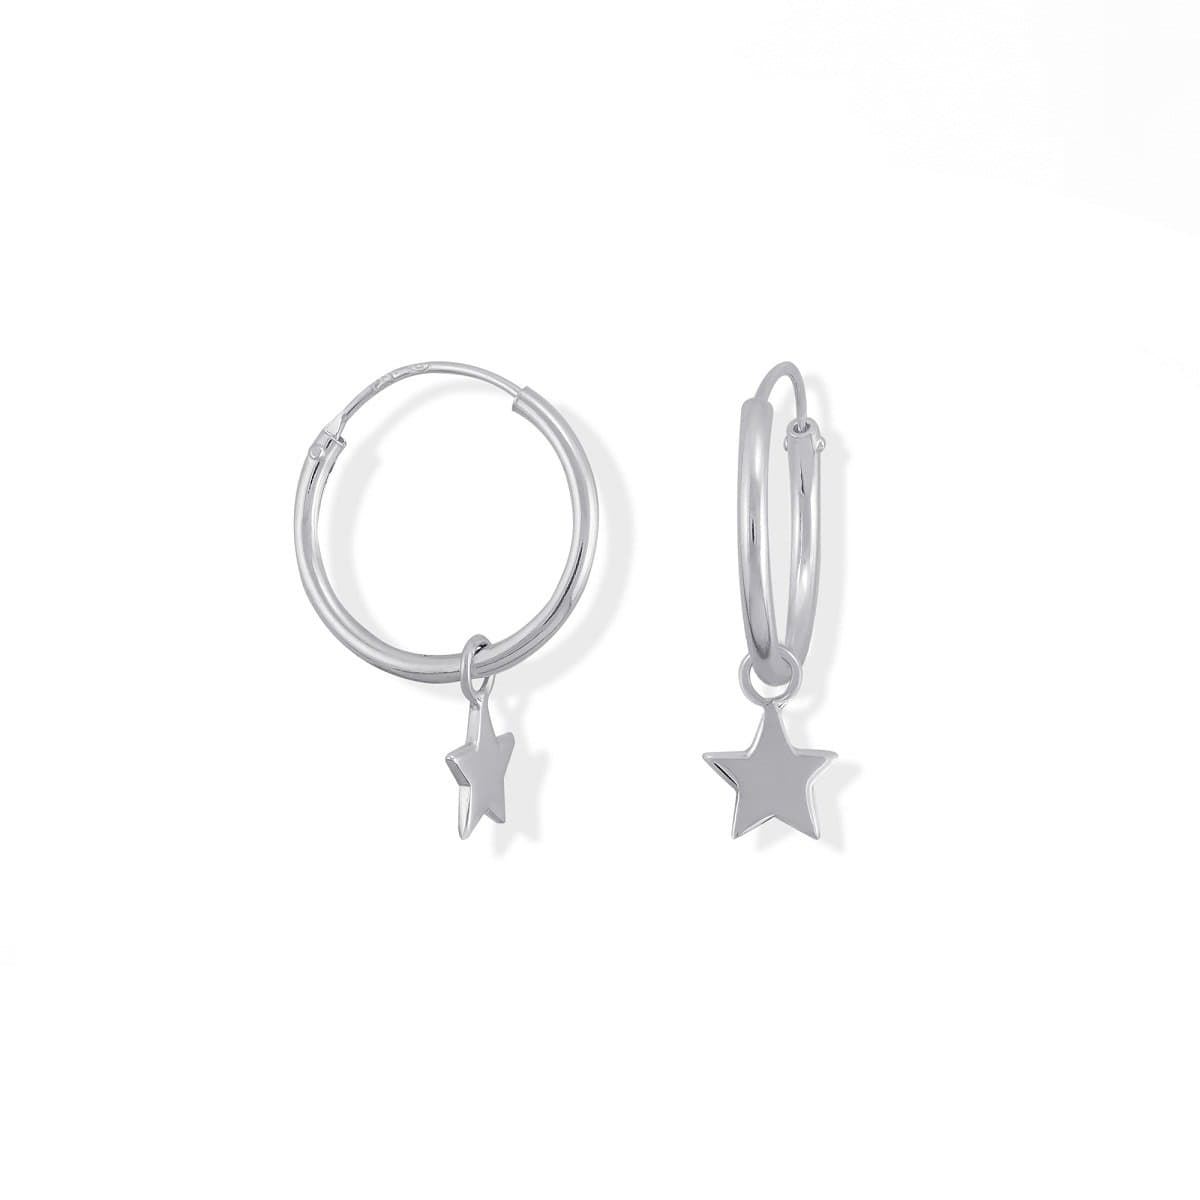 Boma Jewelry Earrings Sterling Silver Star Hoops